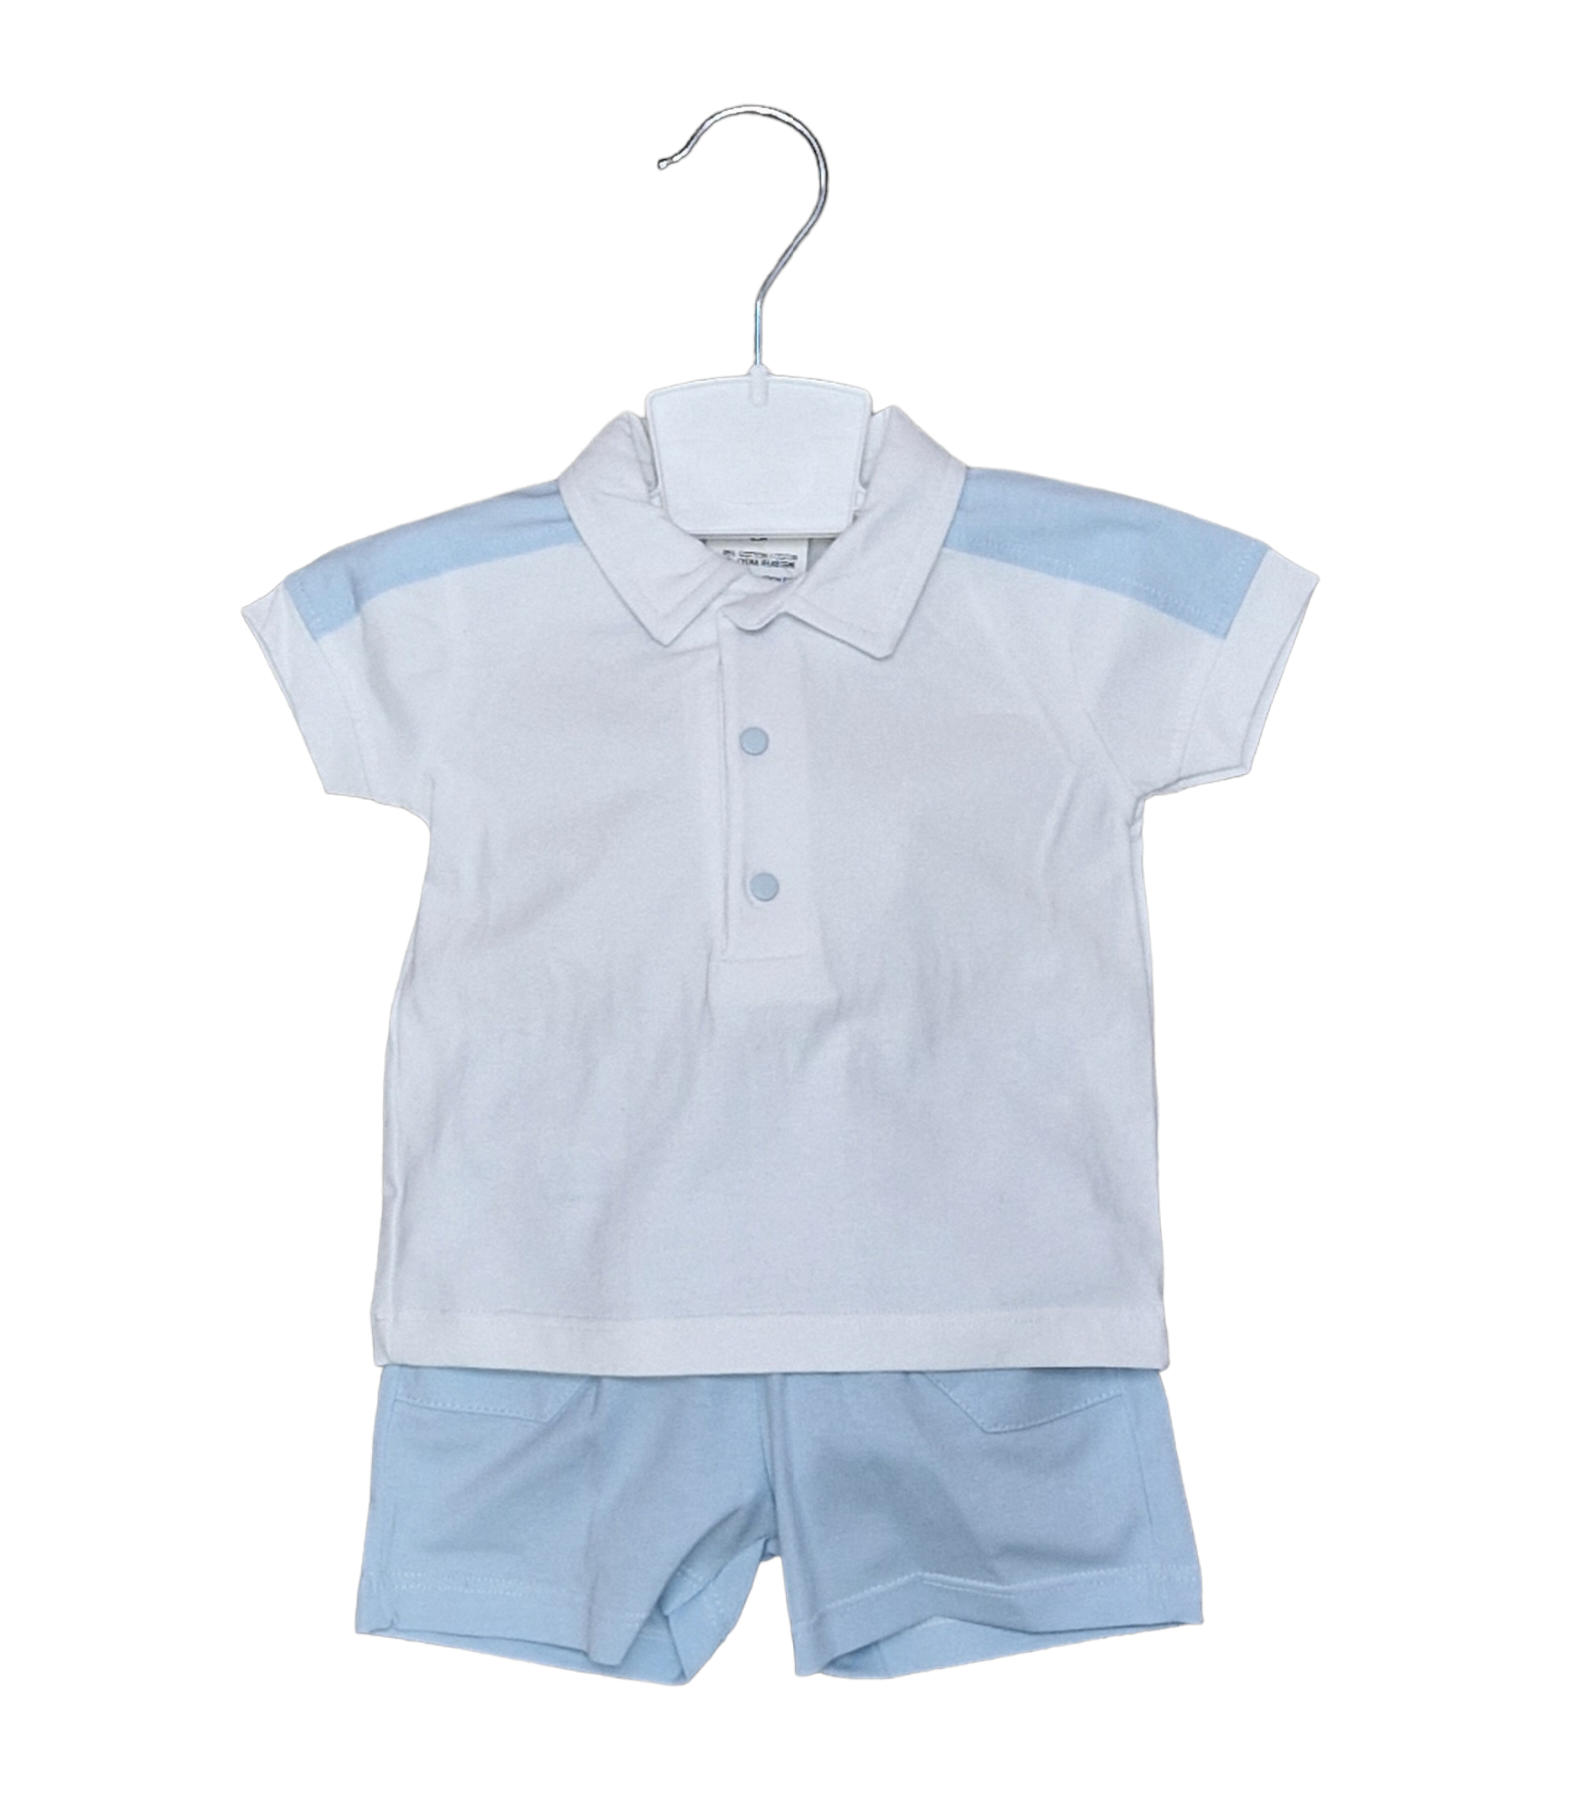 Boys White/Blue Polo Shirt & Pocket Shorts Set (325) - Babyshop Glasgow ...